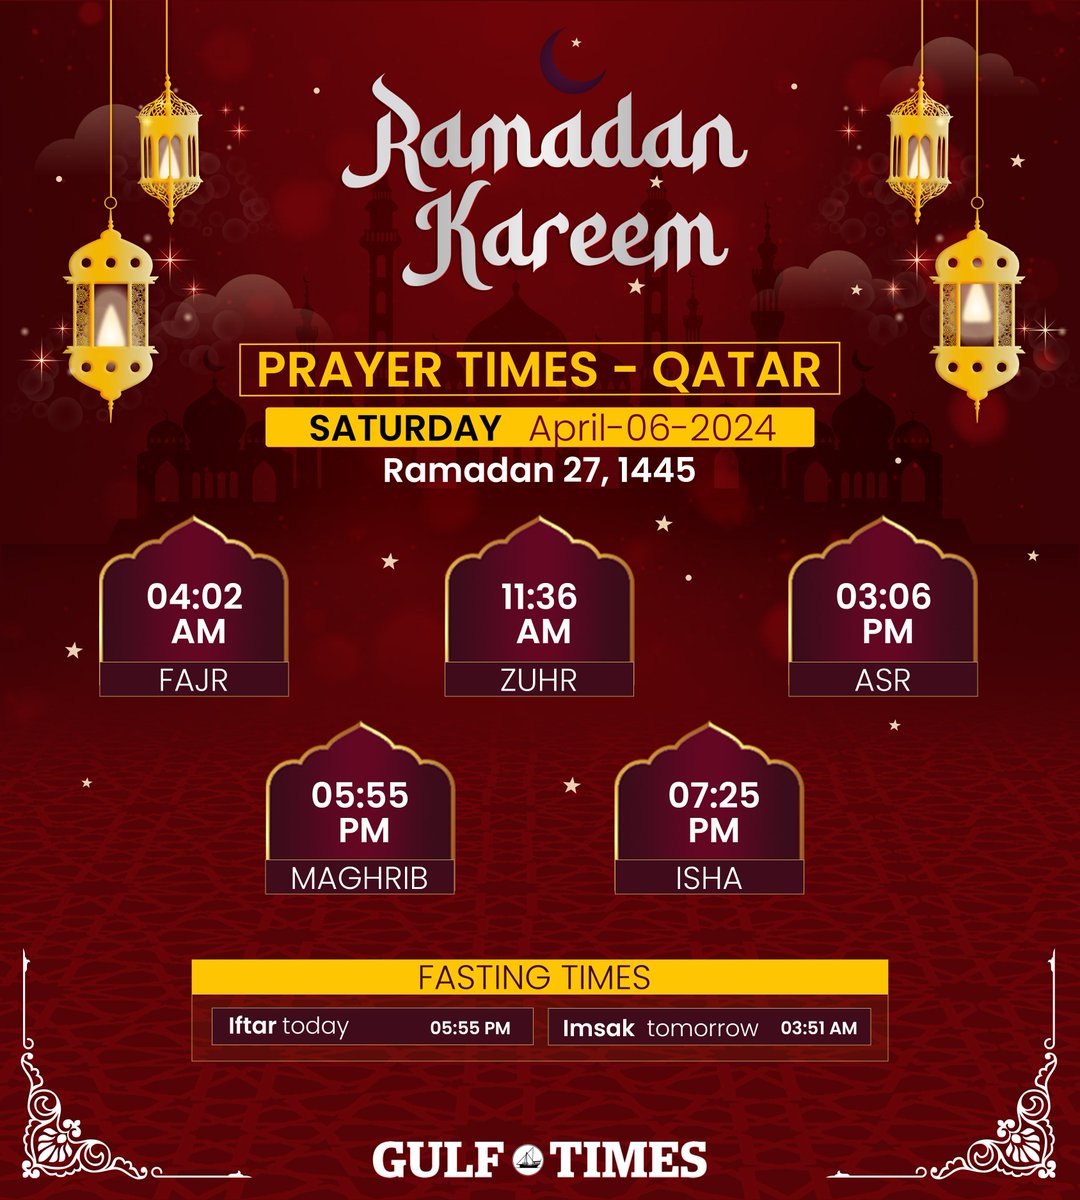 PRAYER TIMES and FASTING TIMES
#ramadan2024 #ramadankareem #qatar #doha #prayertime #suhoor #iftar #imsak